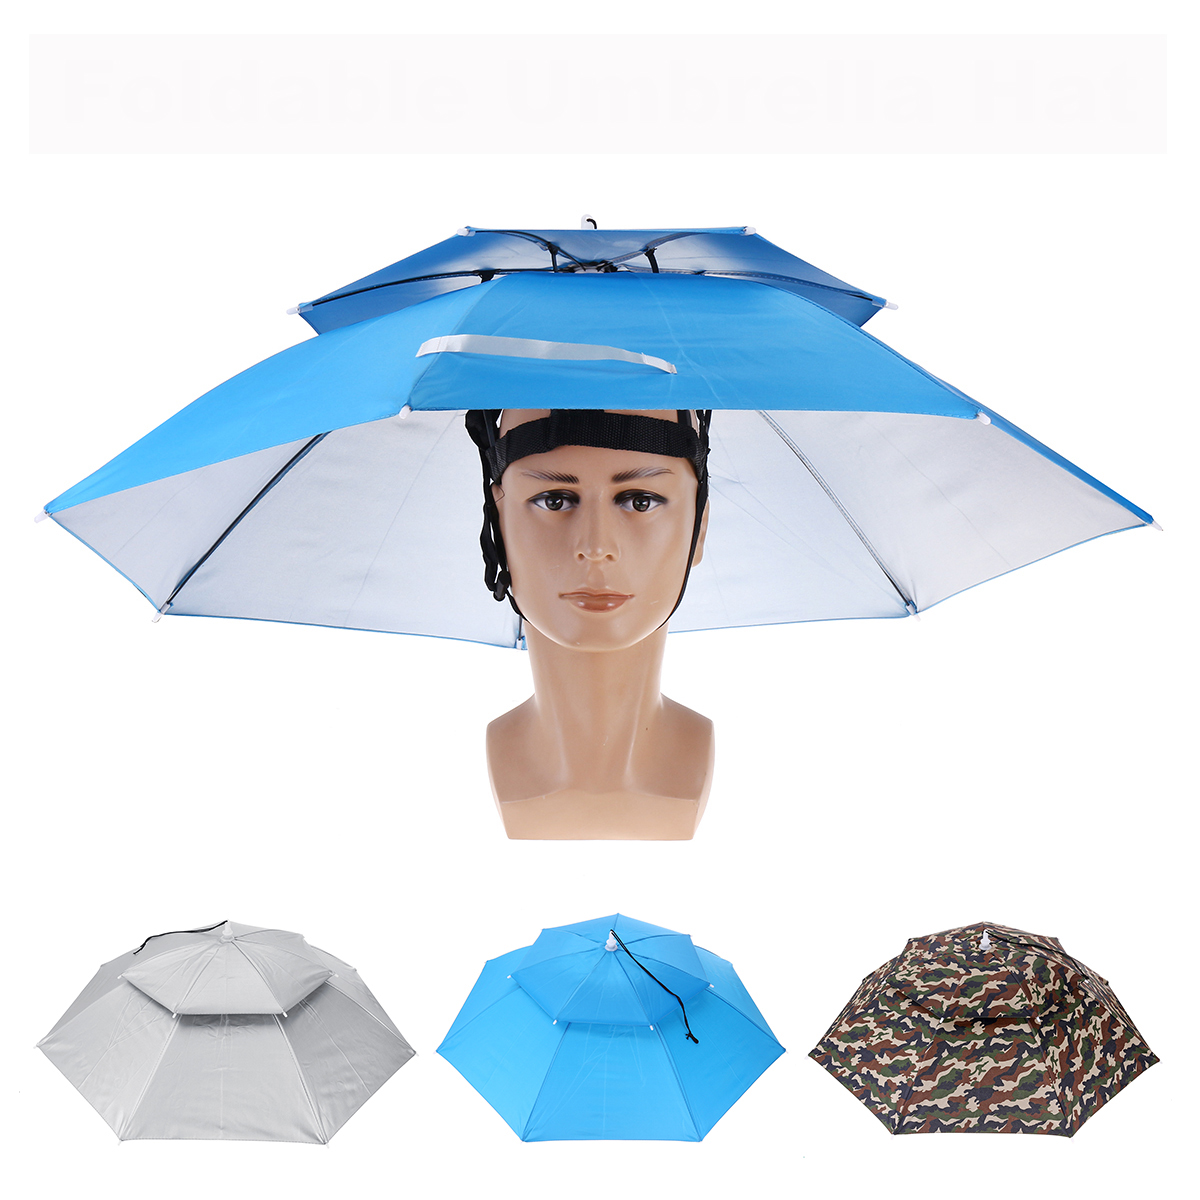 

ZANLURE Foldable Double Layer Sun-proof Fishing Umbrella Hat Outdoor Camping Hiking Golf Umbrella Headwear Cap